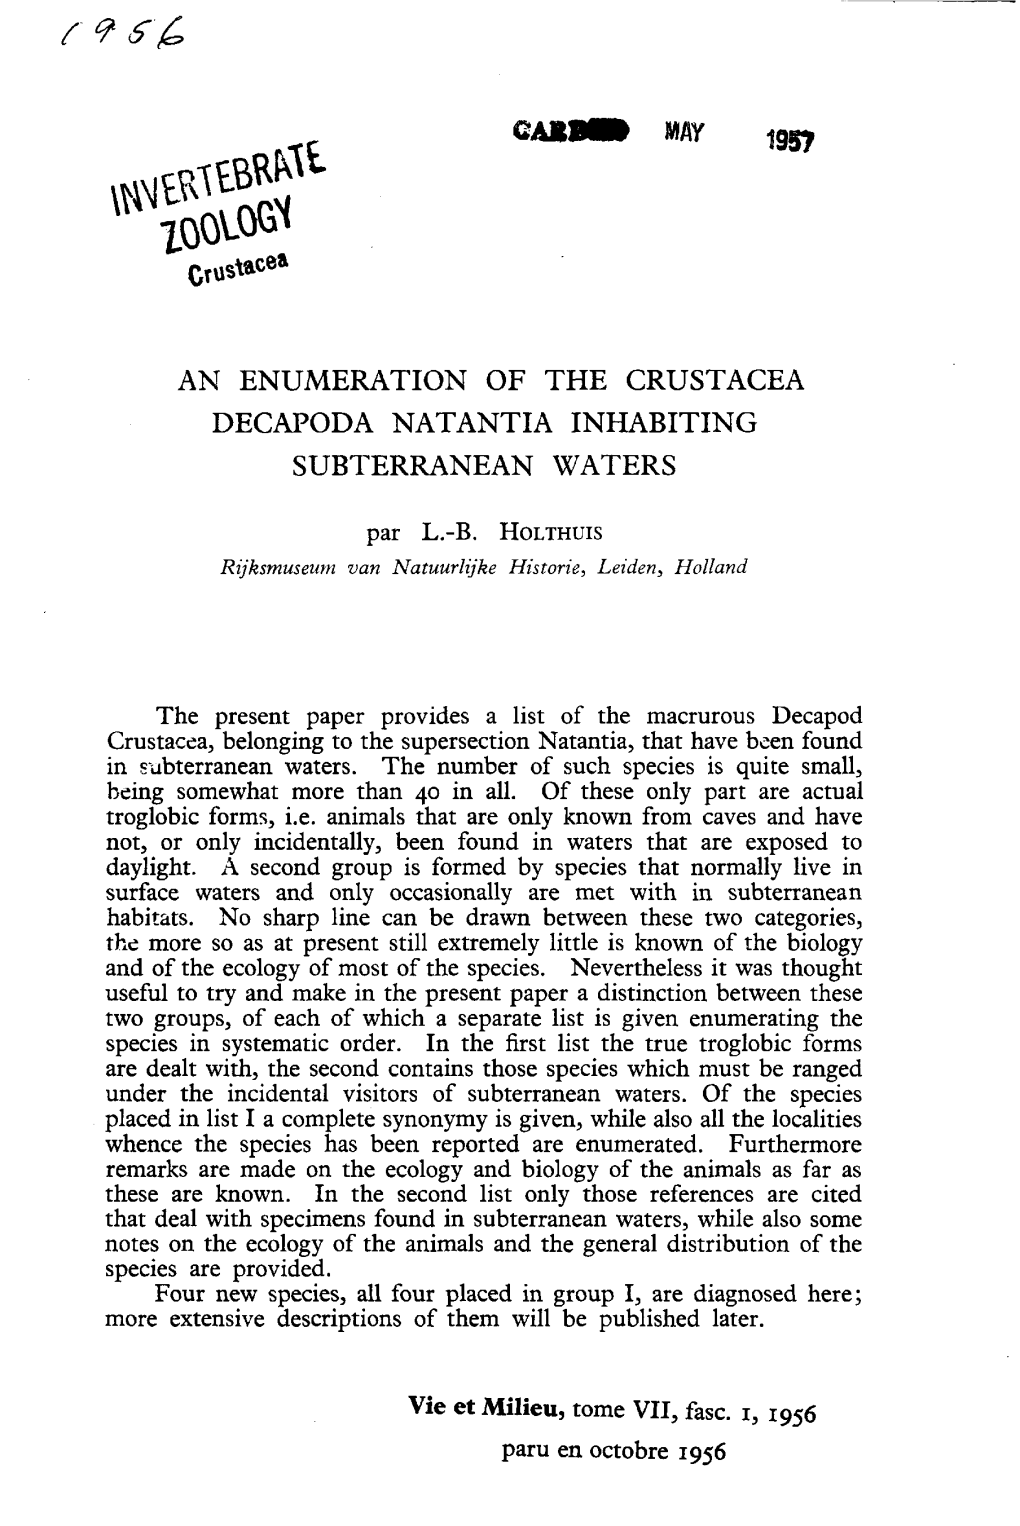 An Enumeration of the Crustacea Decapoda Natantia Inhabiting Subterranean Waters